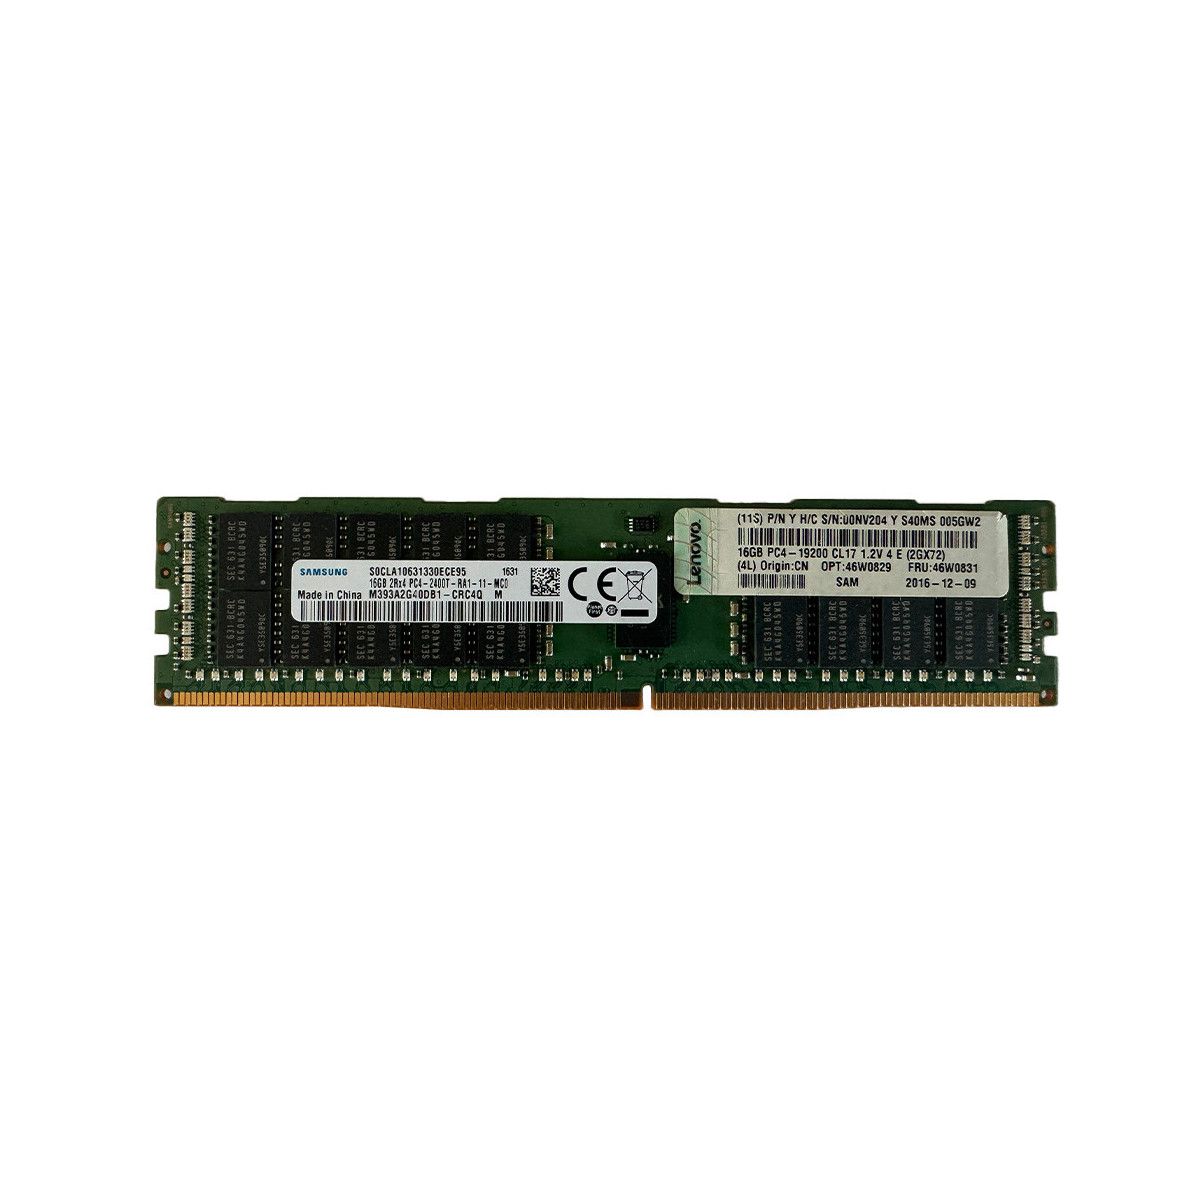 A8797578-MS - Memstar 1x 16GB DDR4-2400 RDIMM PC4-19200T-R - Mem-Star Compatible OEM Memoria 1 - Memstar 